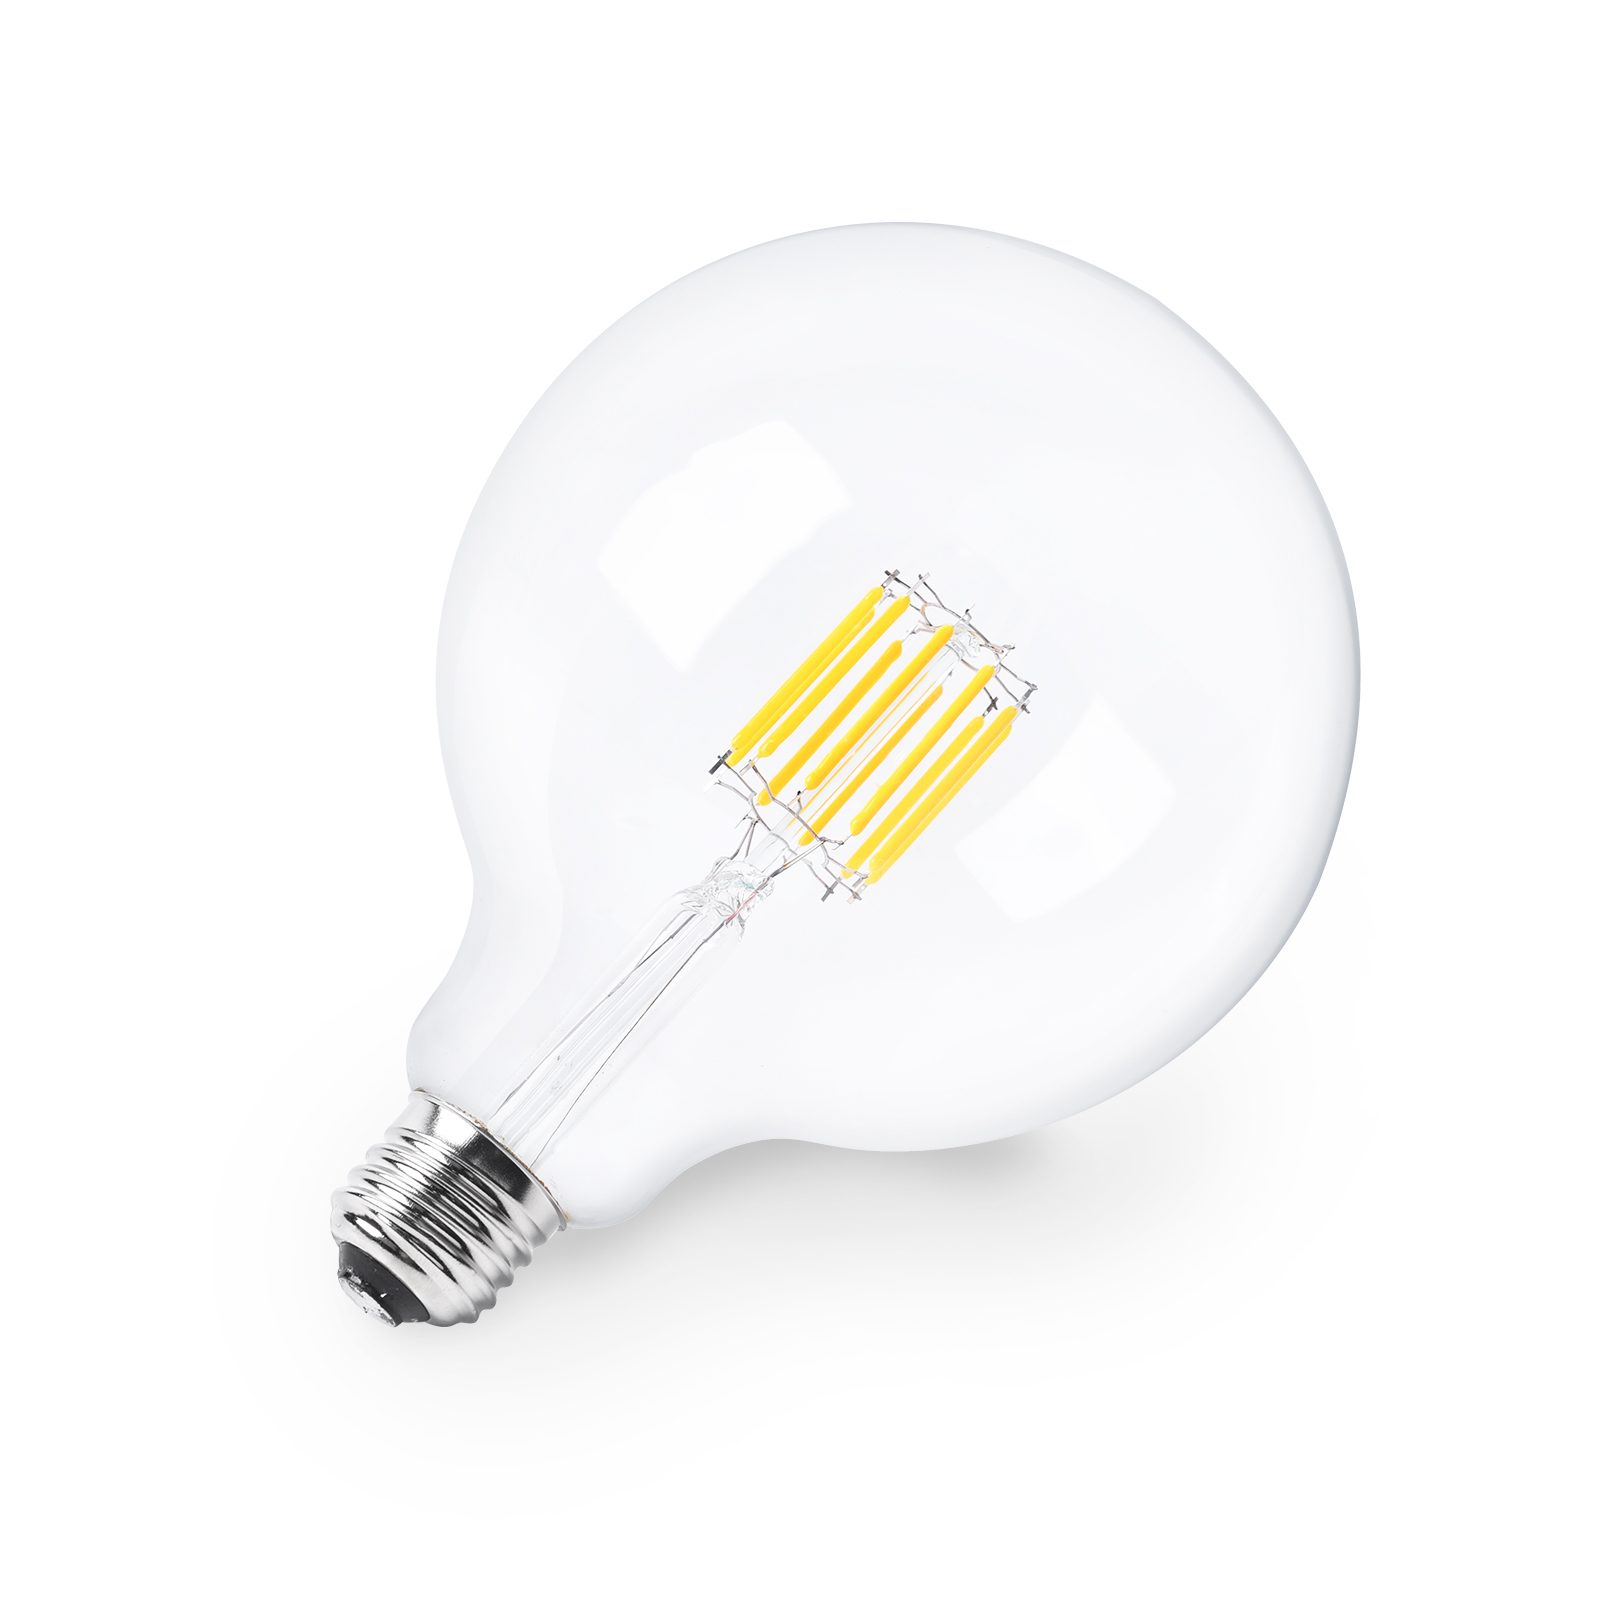 10W G125 E26 LED Vintage Light Bulbs